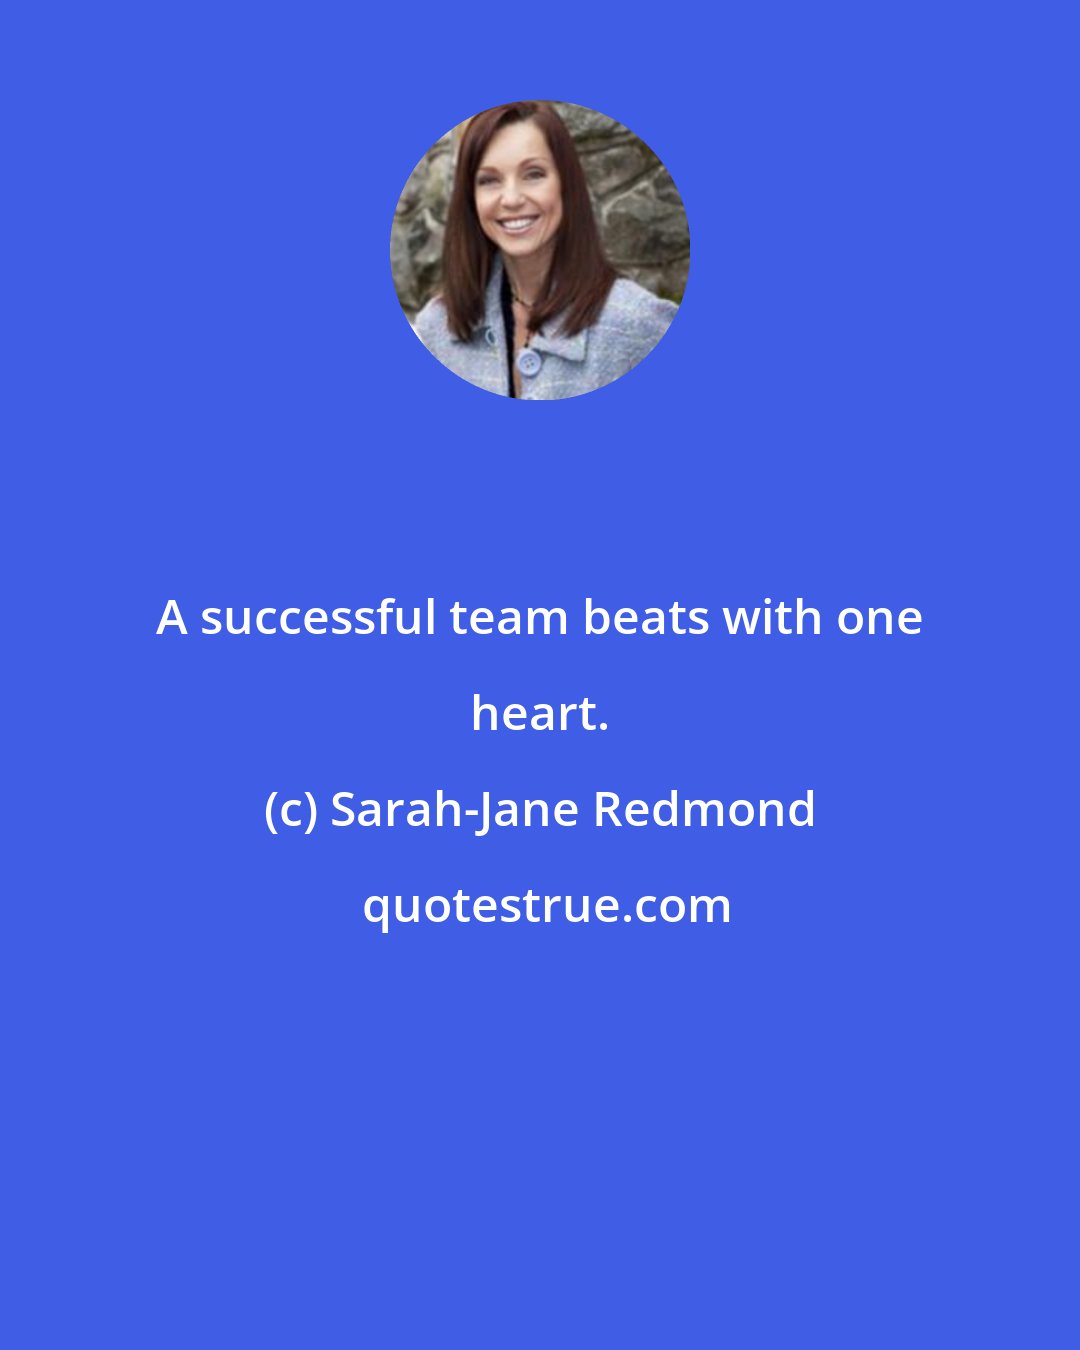 Sarah-Jane Redmond: A successful team beats with one heart.